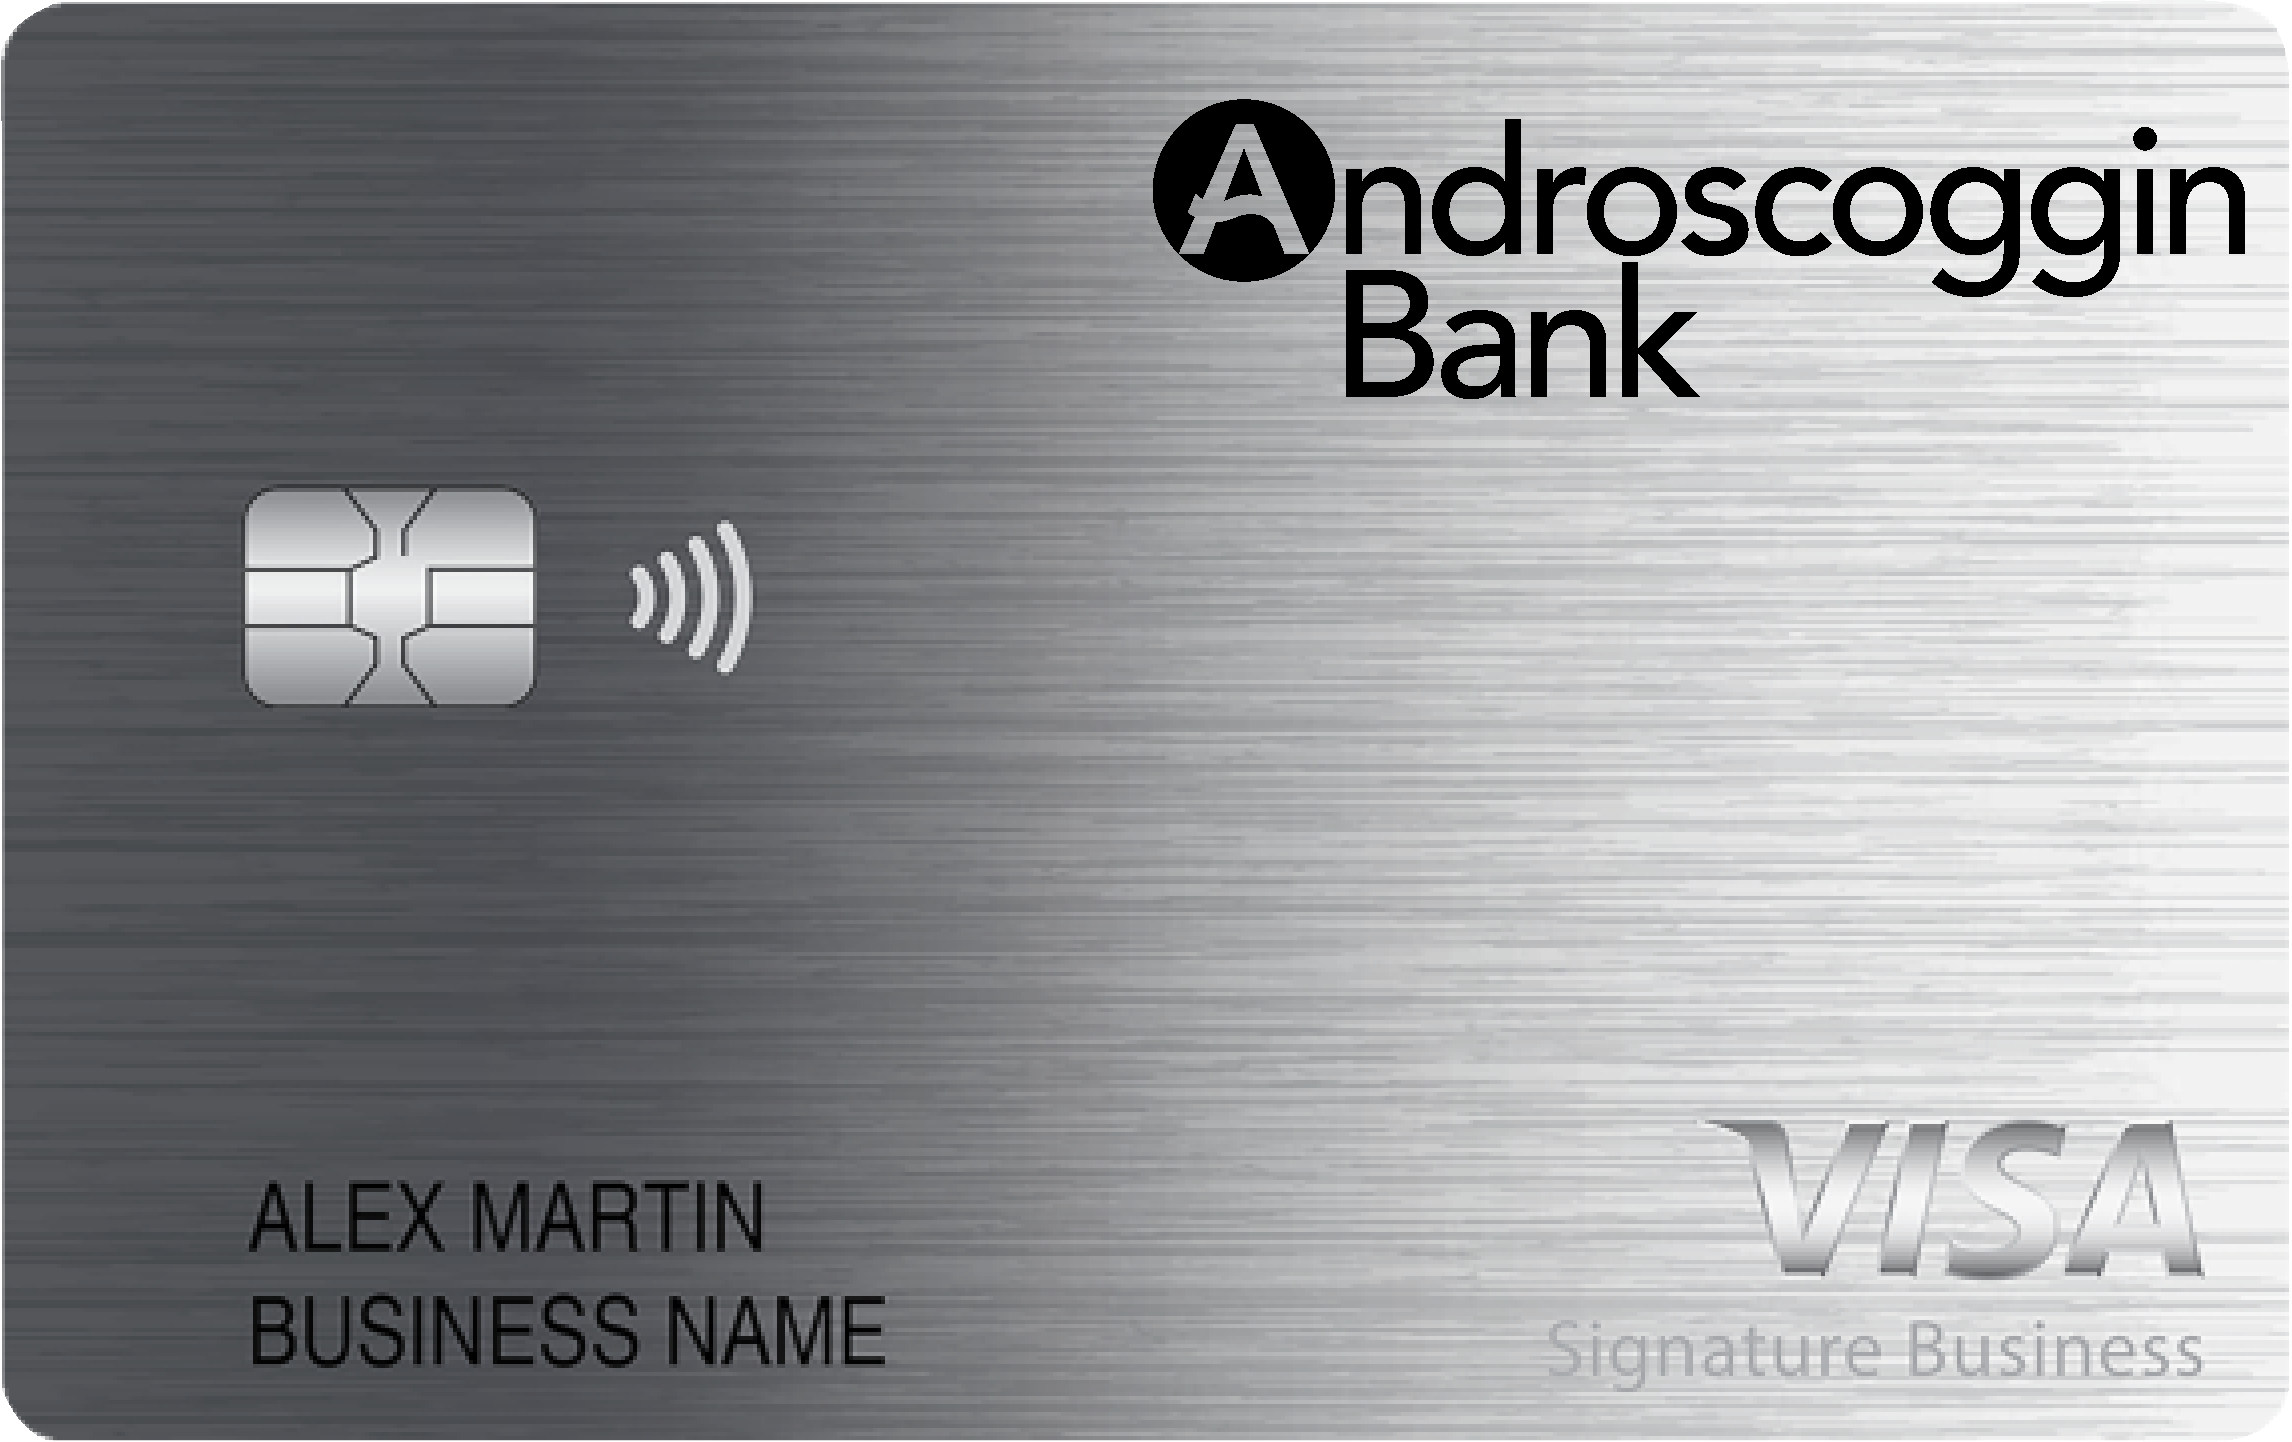 Androscoggin Bank Smart Business Rewards Card